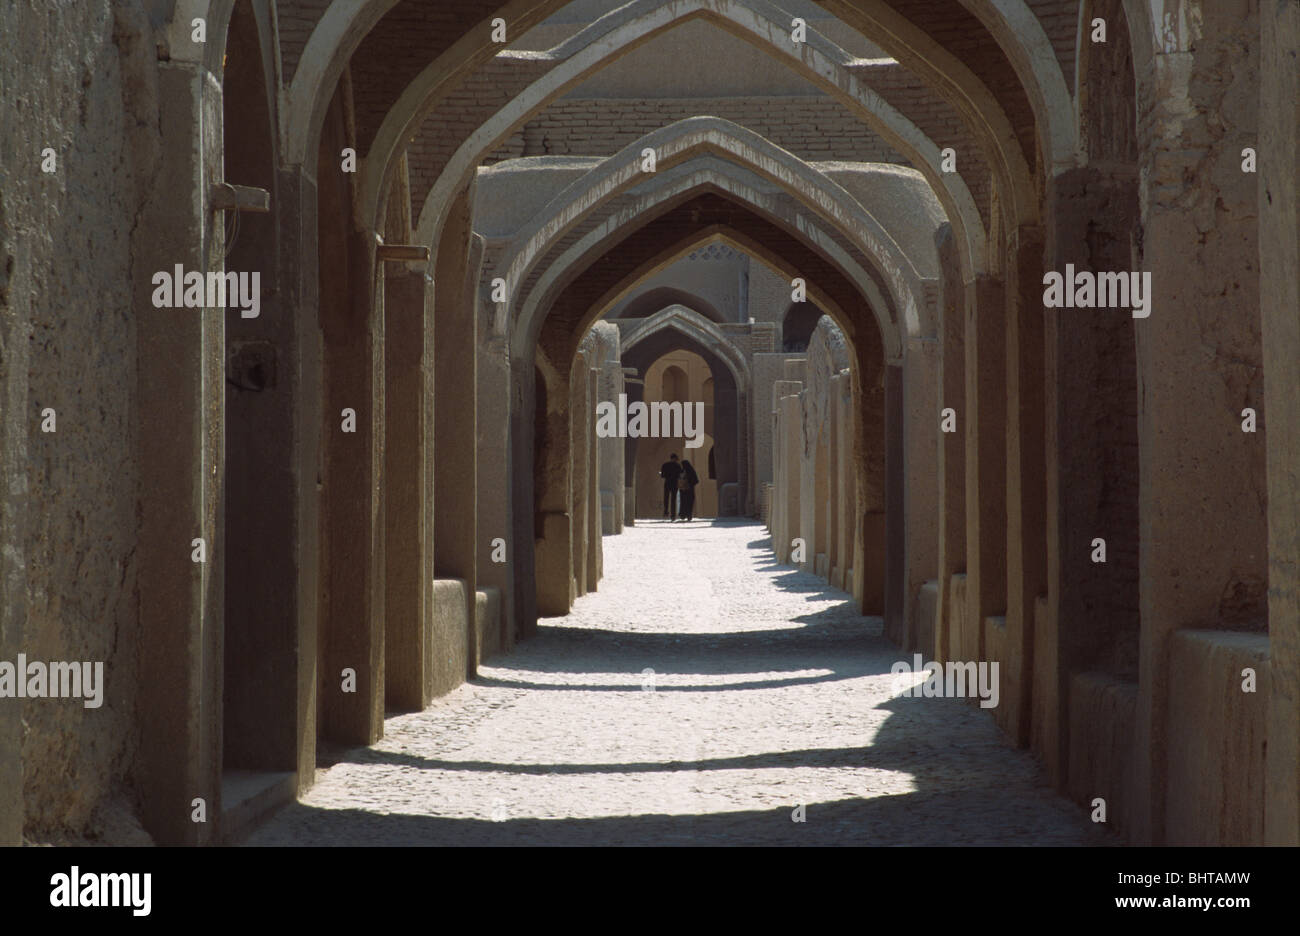 Archway inside ruined citadel of Arg-e Bam, Iran Stock Photo